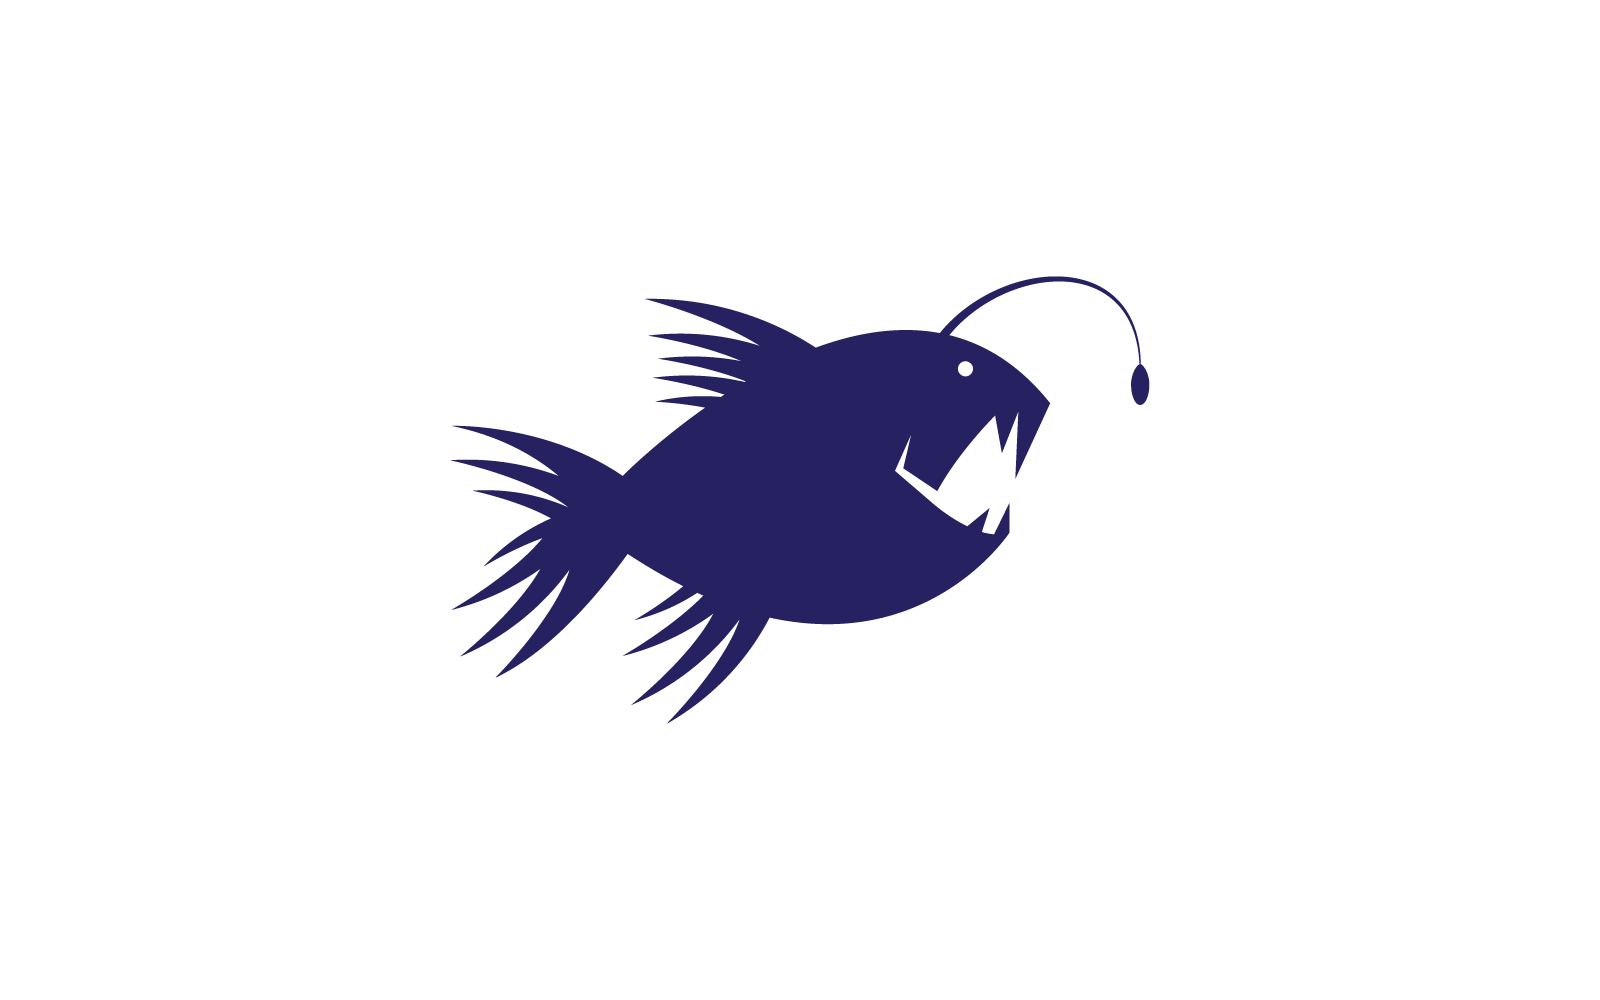 Anglerfisch-Logo-Symbol, Illustrationsvektor, flaches Design